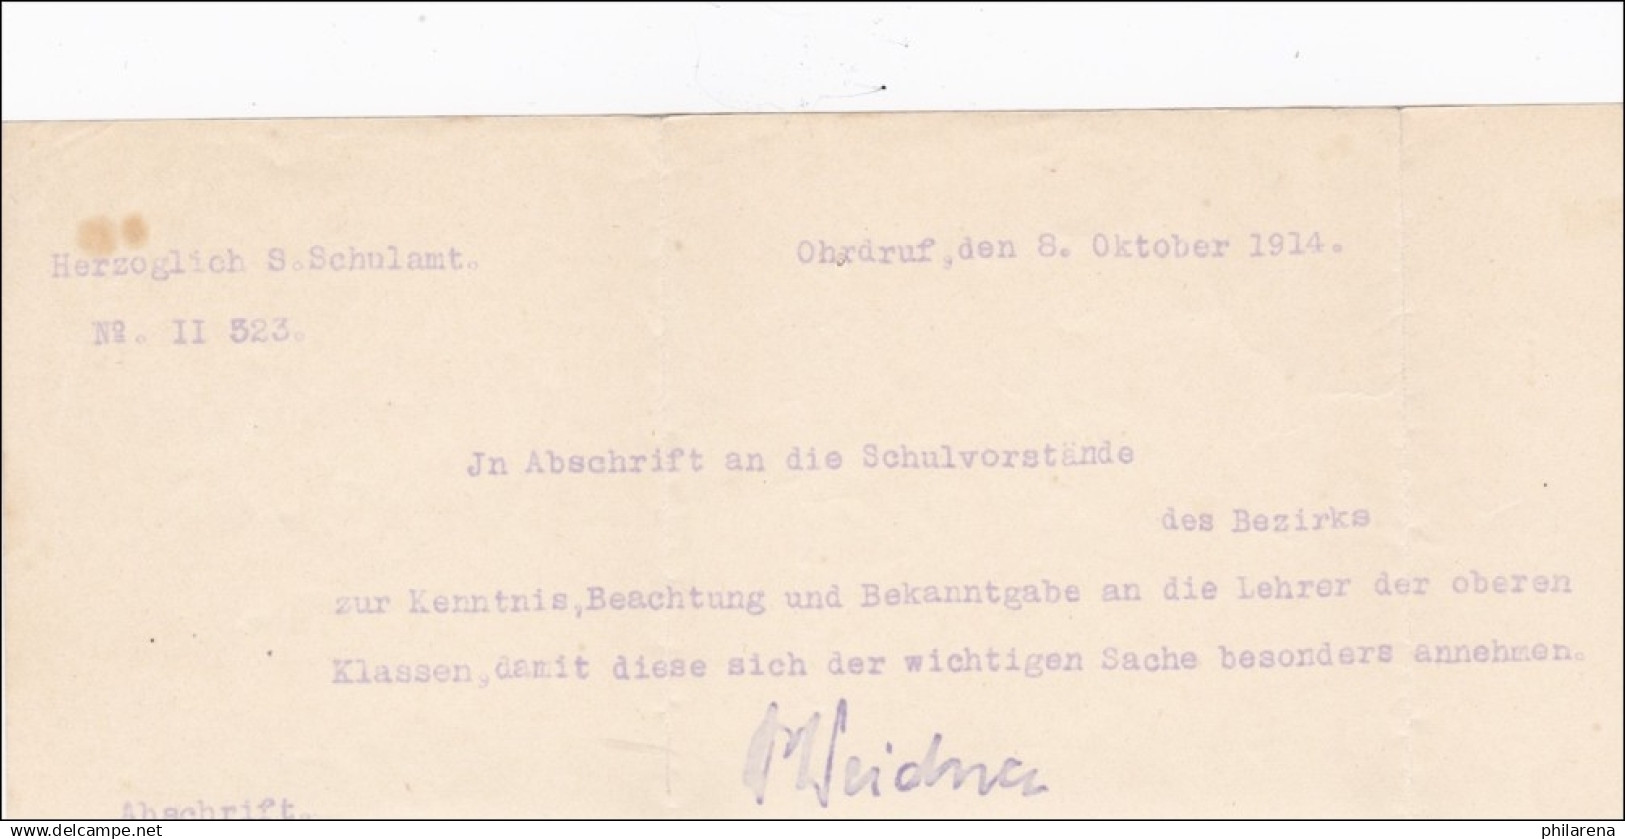 Landratsamt Ohrdruf An Schulvorstand Schönau V.d.W. 1914 - Covers & Documents